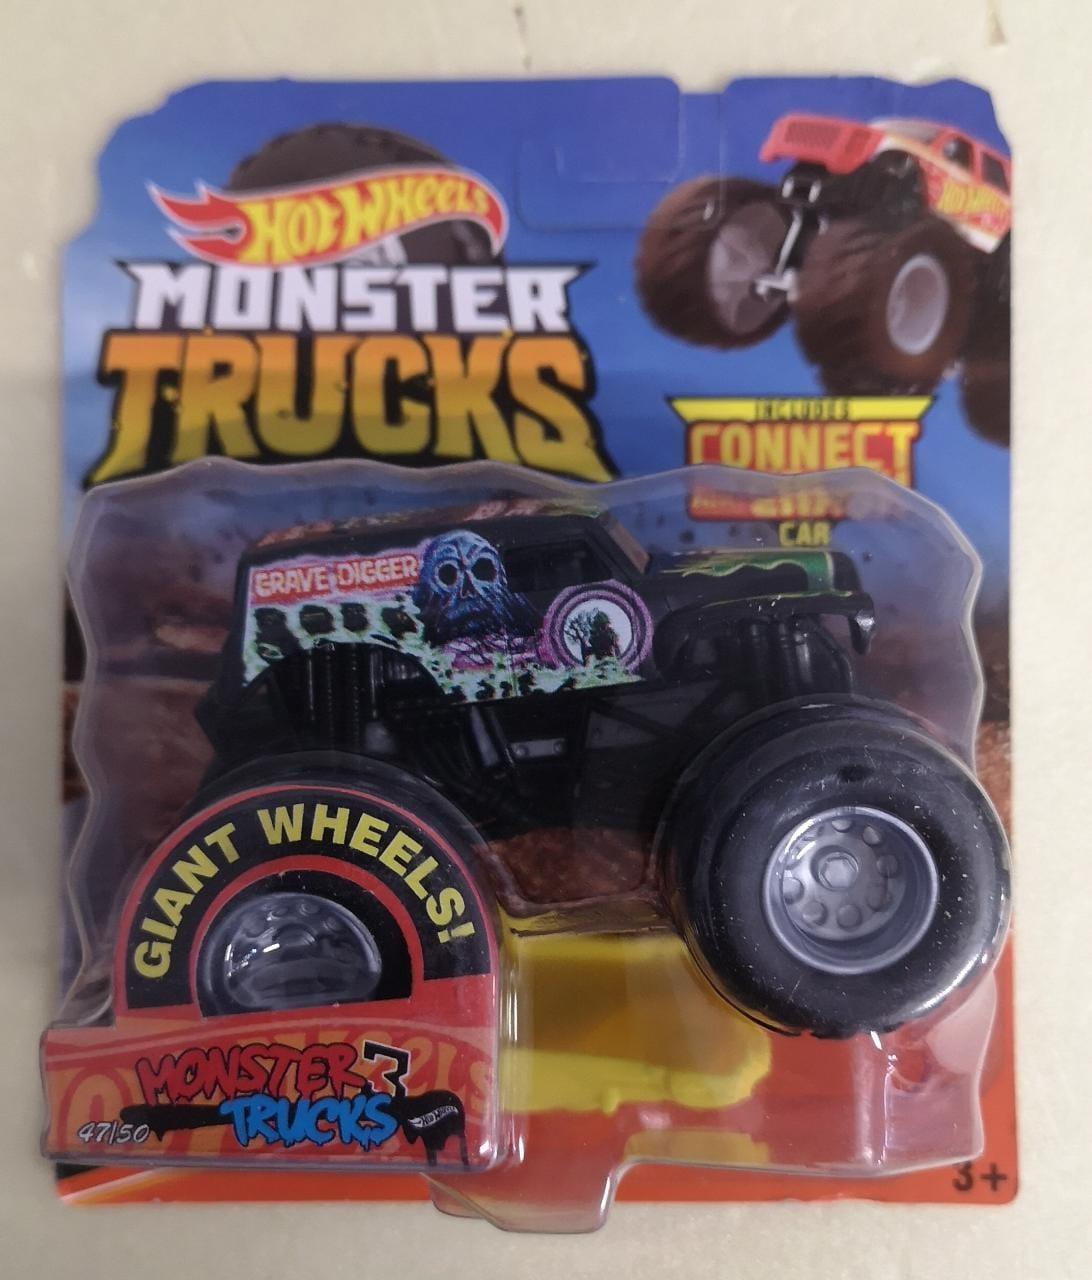 Машина Монстер трэк "Hot Wheels" / Monster Trucks